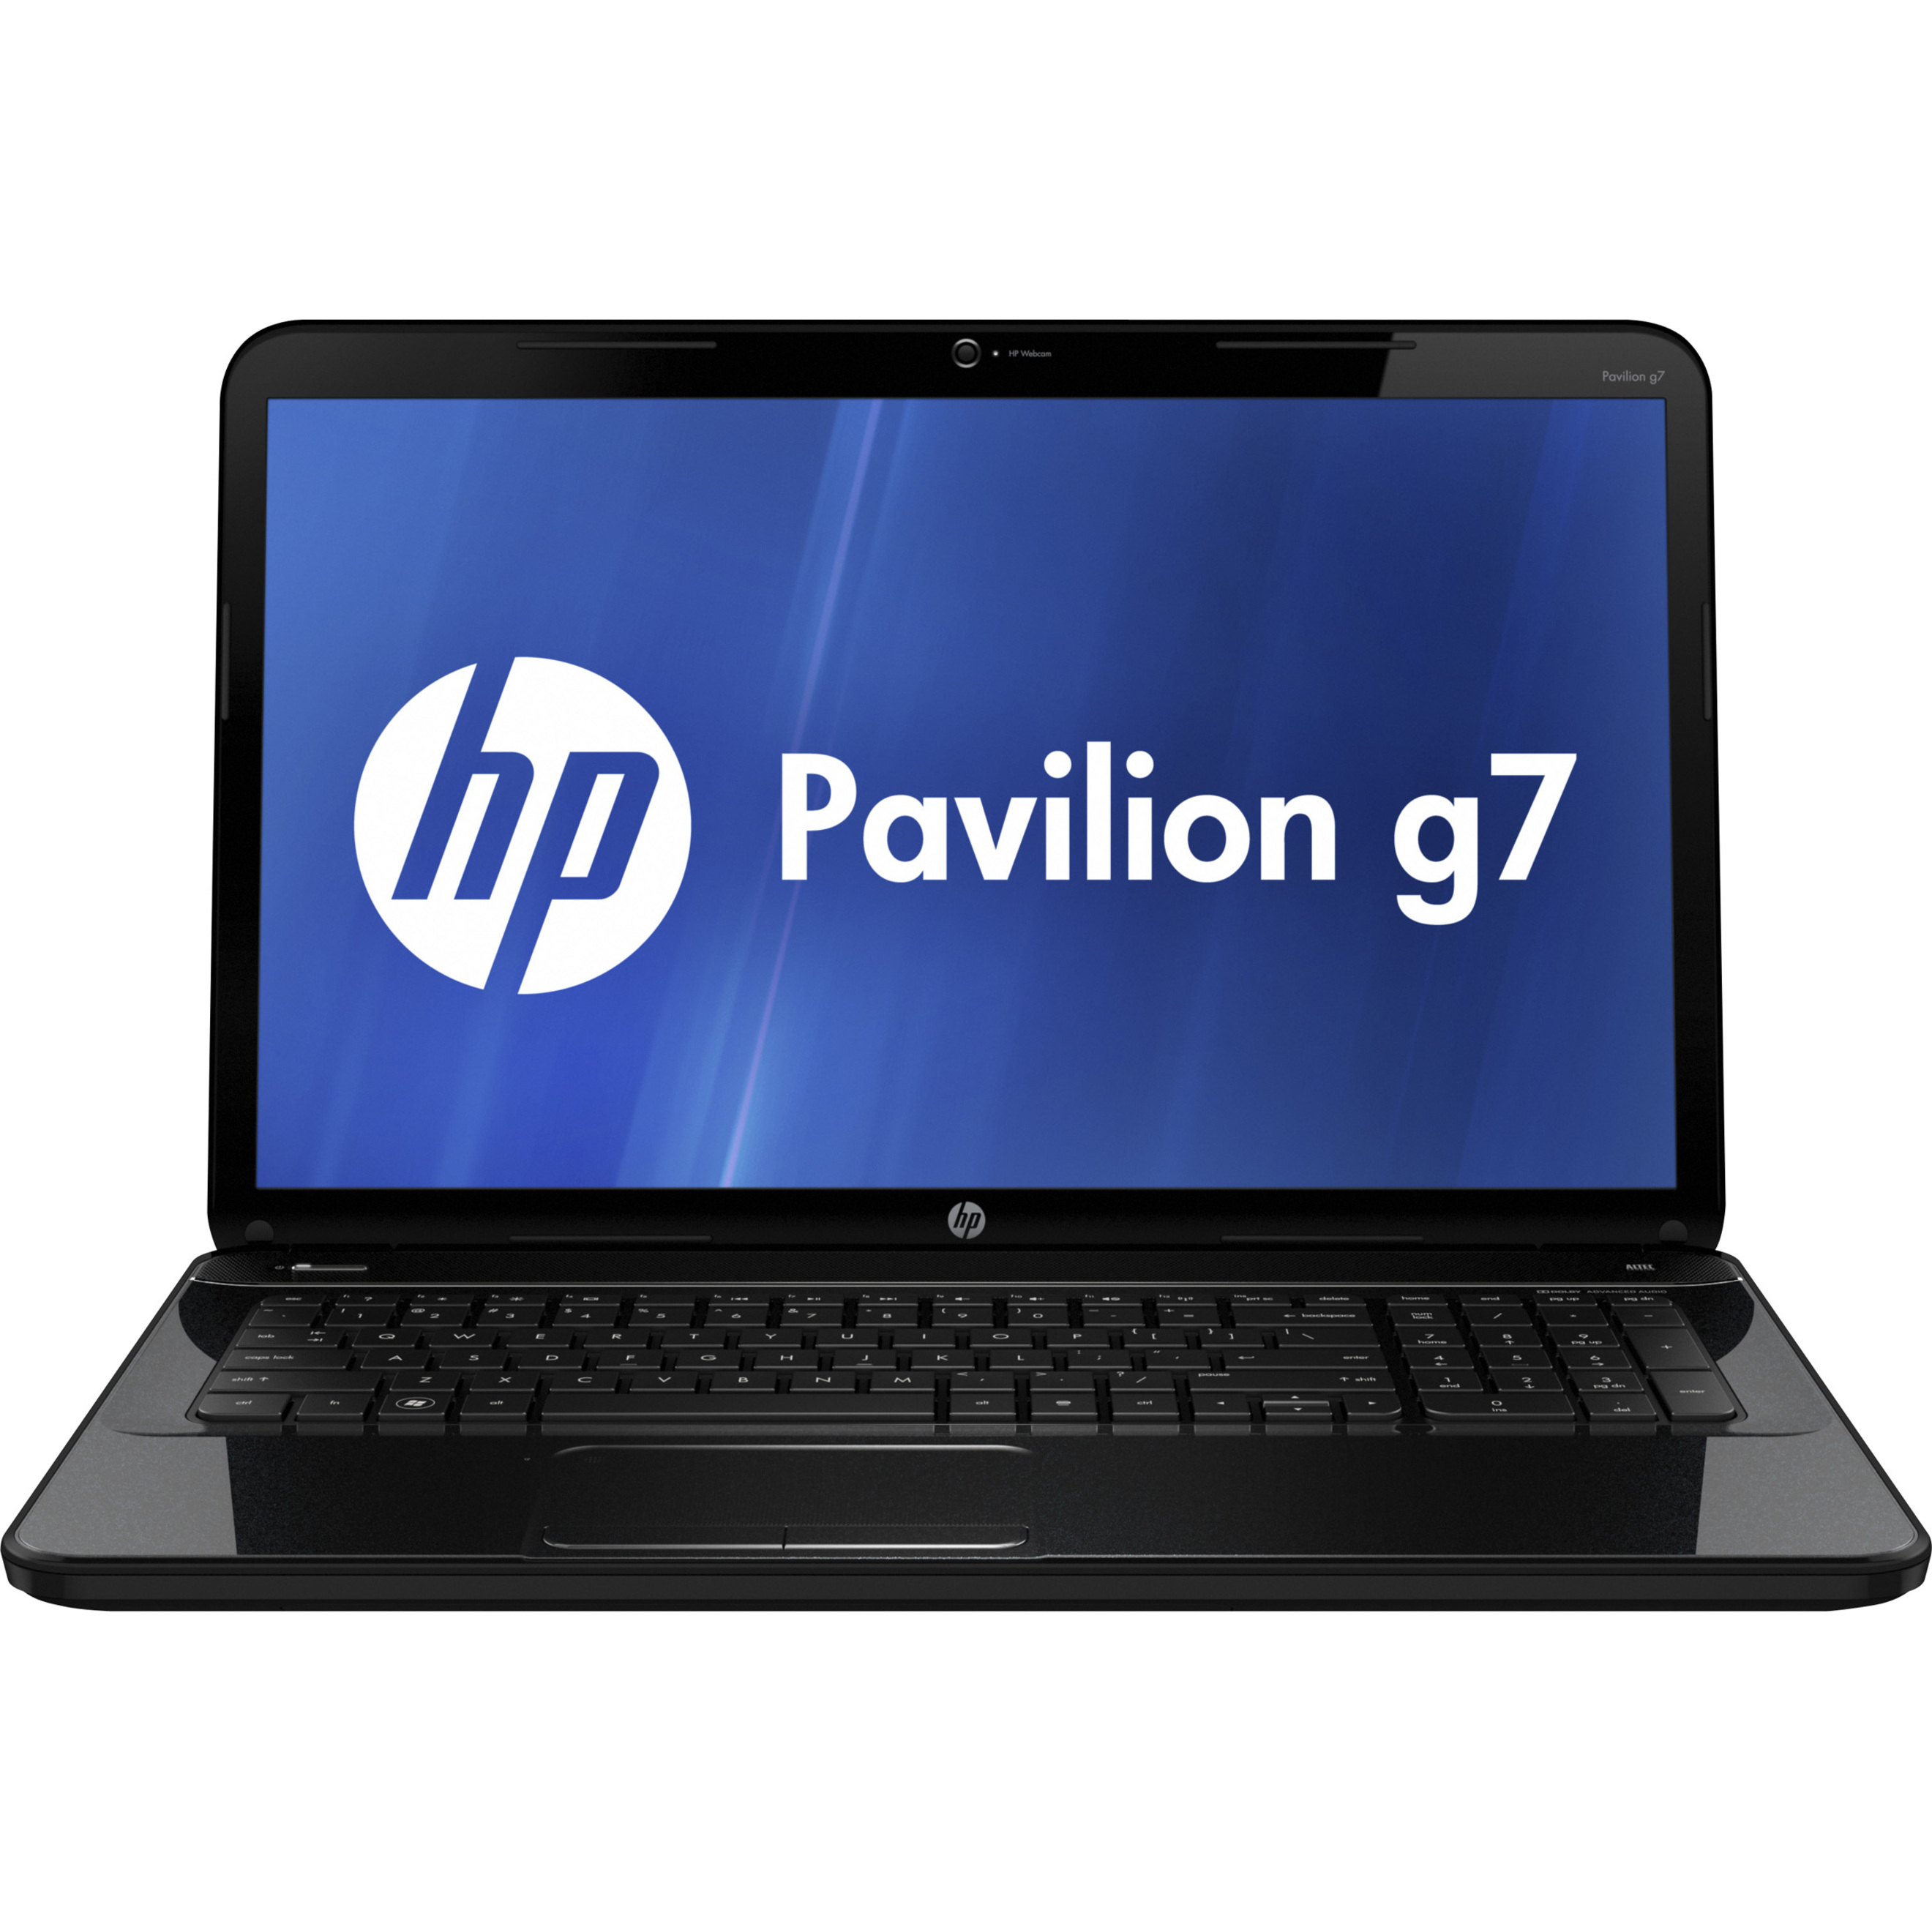 HP Pavilion 17.3" Laptop, AMD A-Series A8-4500M, 500GB HD, DVD Writer, Windows 8, g7-2269wm - image 1 of 6